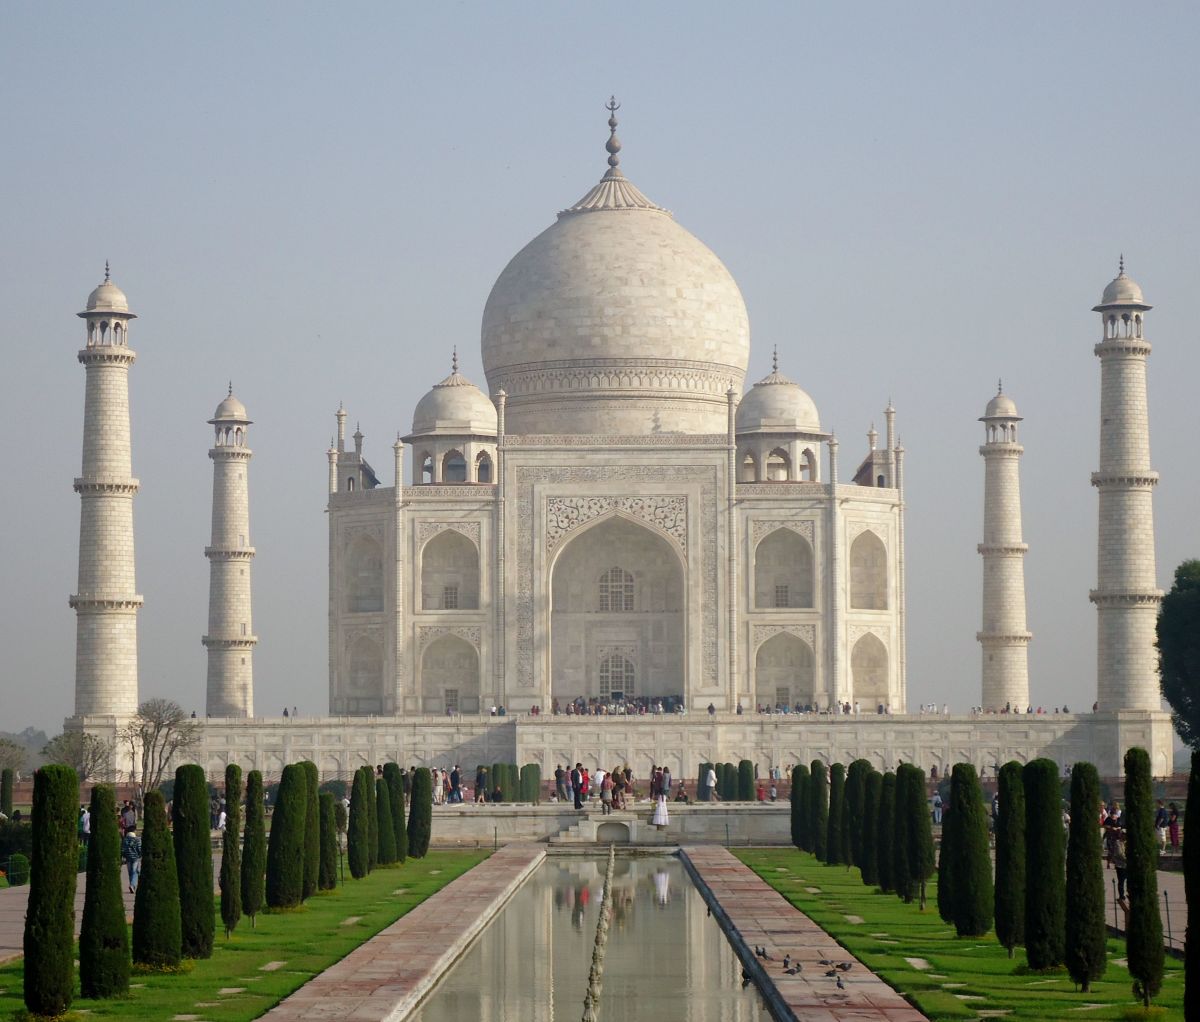 Top Tips for Visiting the Taj Mahal